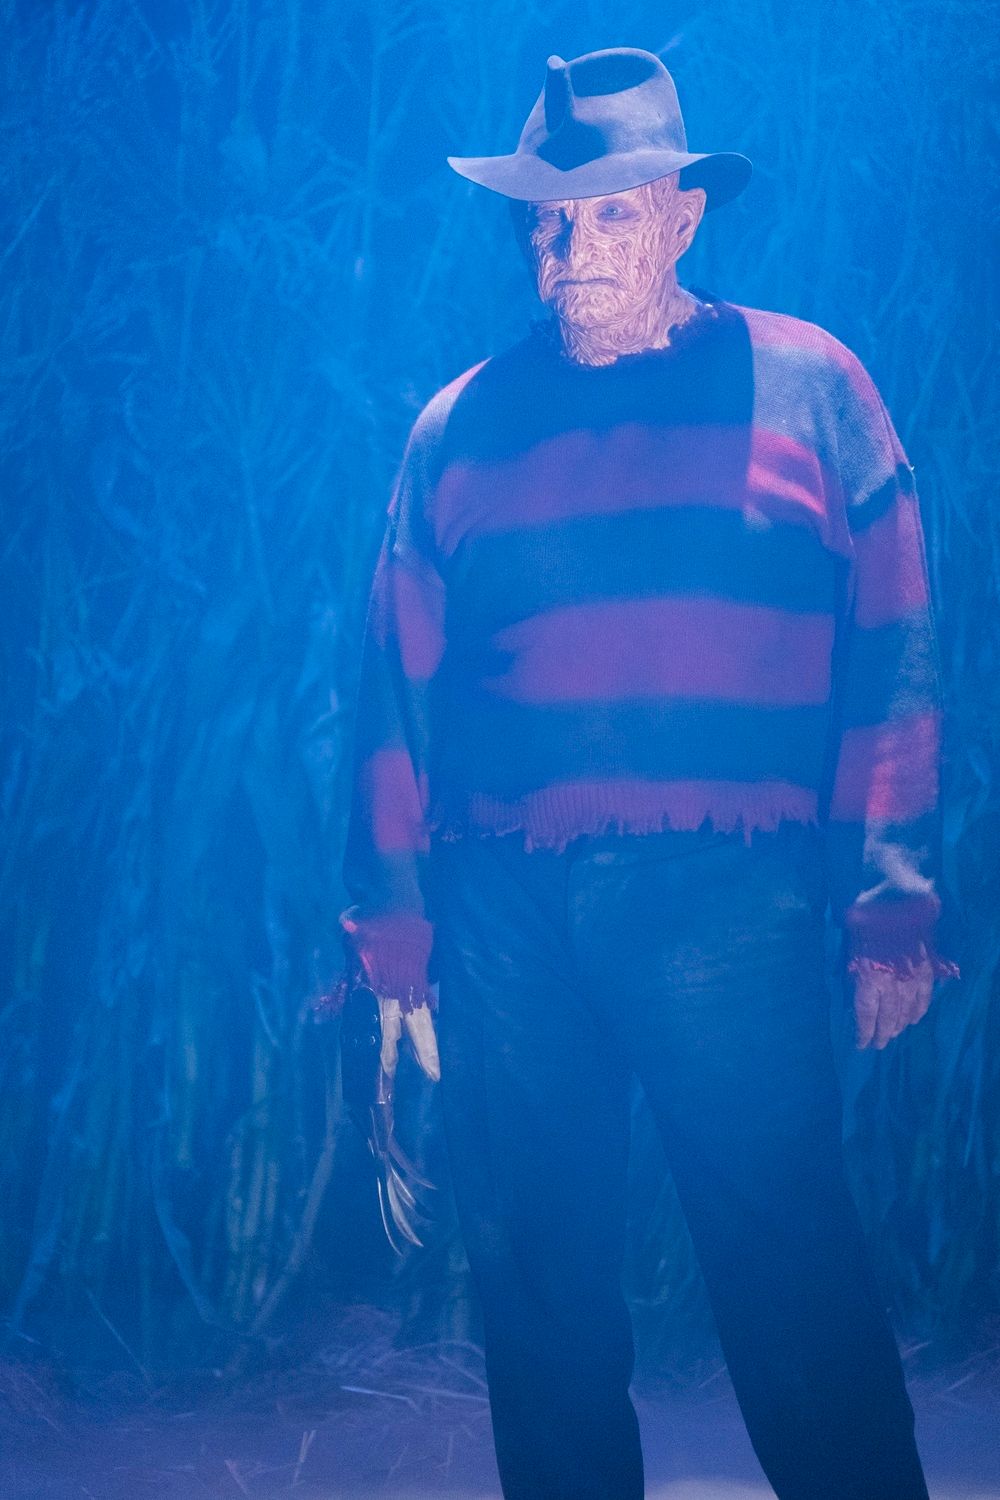 Freddy Krueger in The Goldbergs Halloween episode played by Robert Englund #10